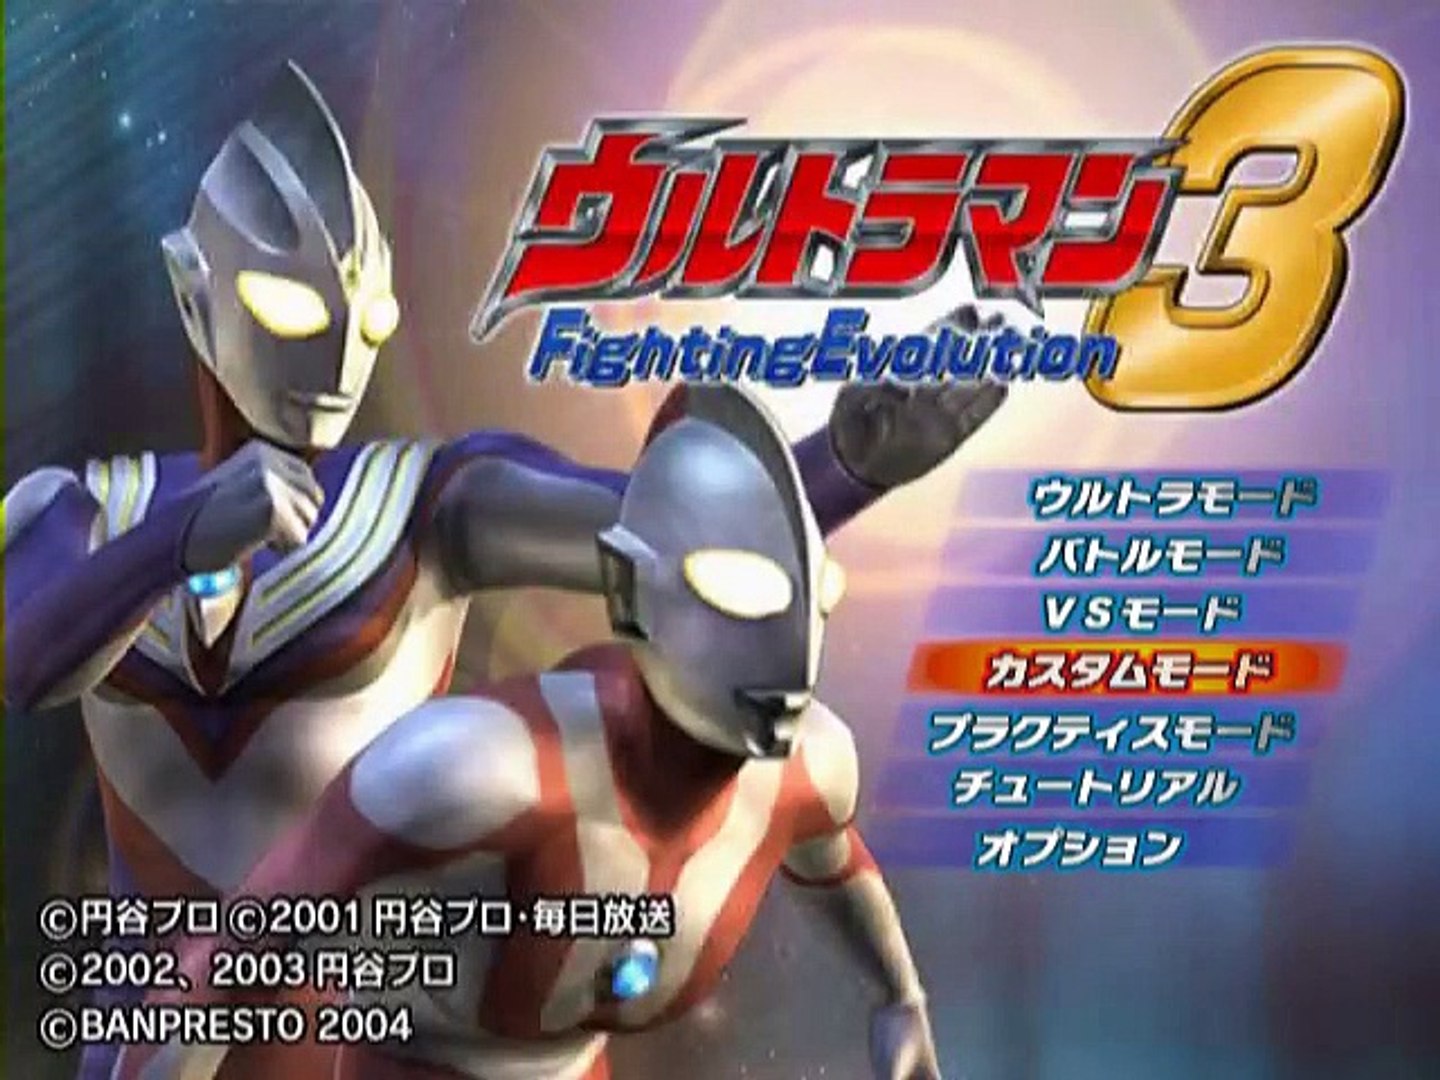 Ultraman Fighting Evolution 3 online multiplayer - ps2